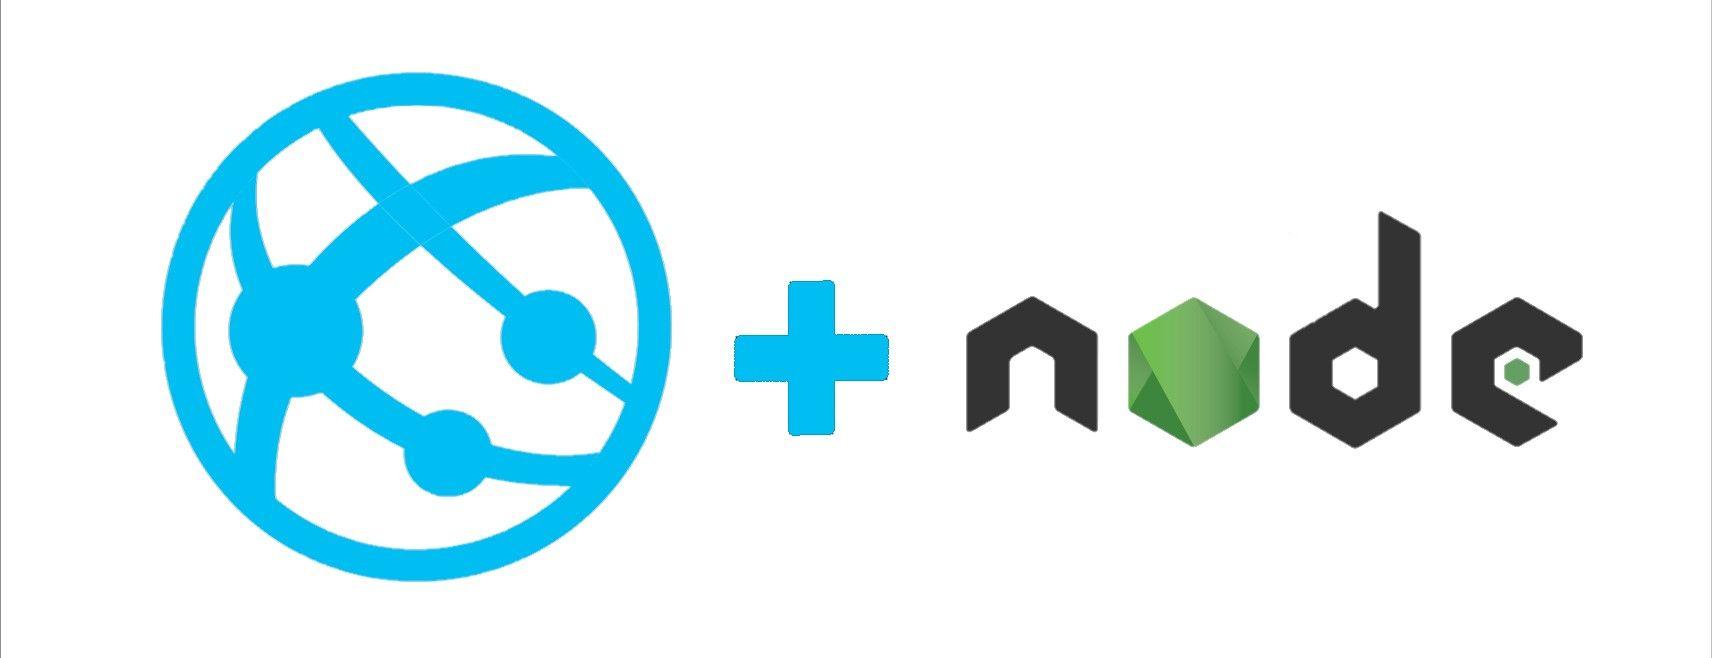 Azure Web App Logo - Custom NodeJs Deployment on Azure Web App · Hao's Blog